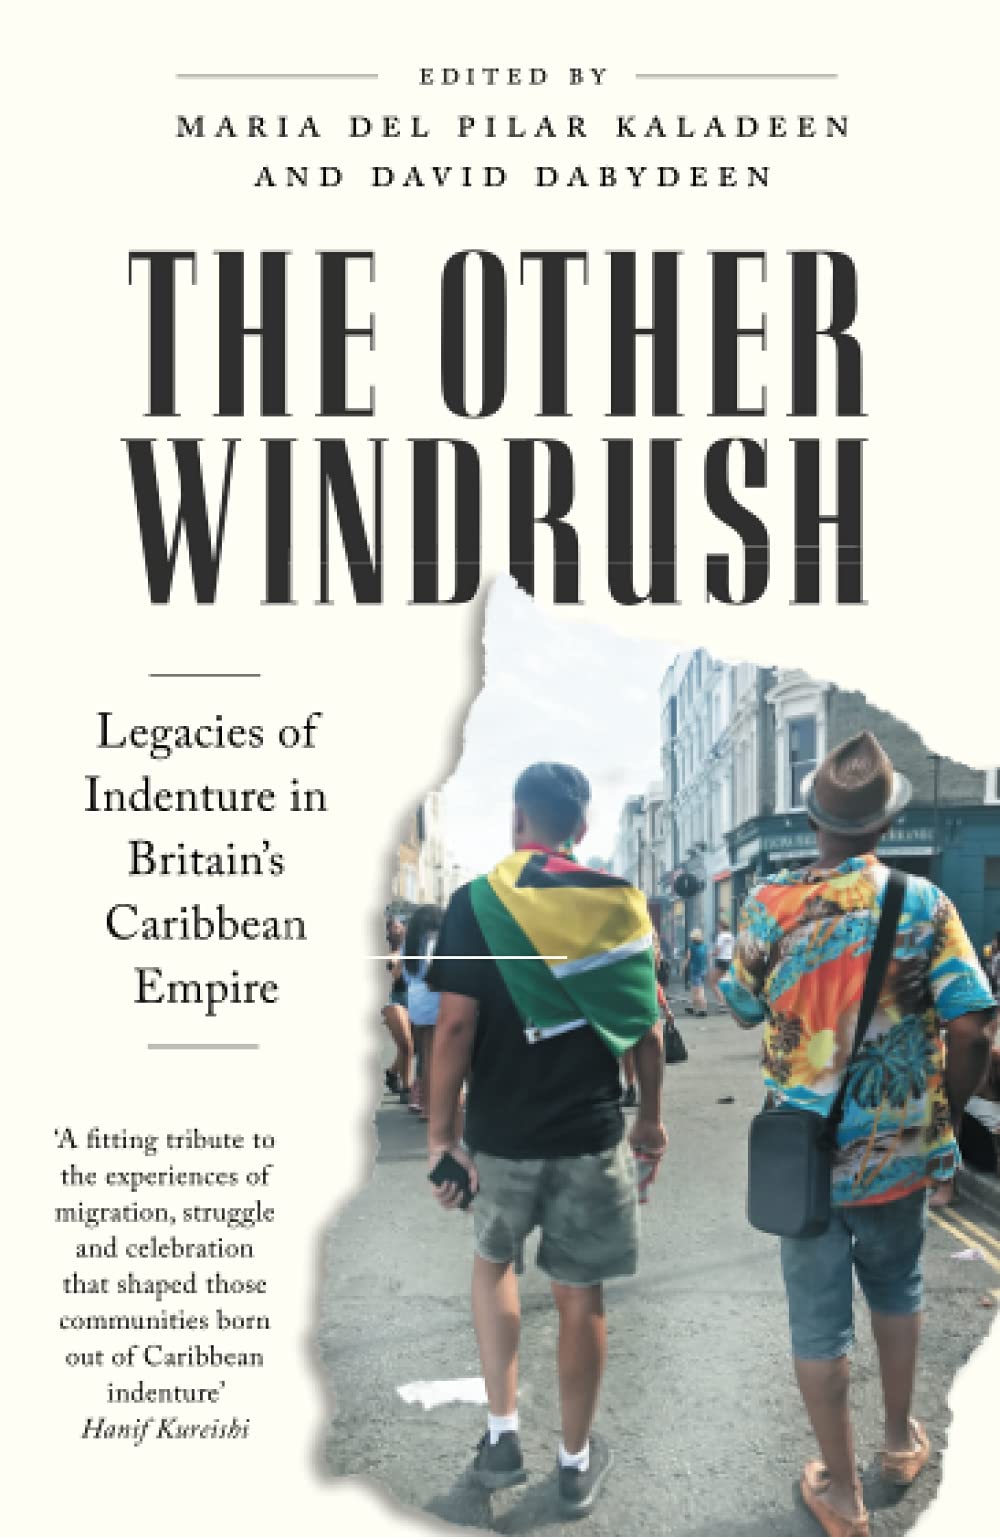 The Other Windrush: Legacies of Indenture in Britain's Caribbean Empire - Maria del Pilar Kaladeen, David Dabydeen (Editors)